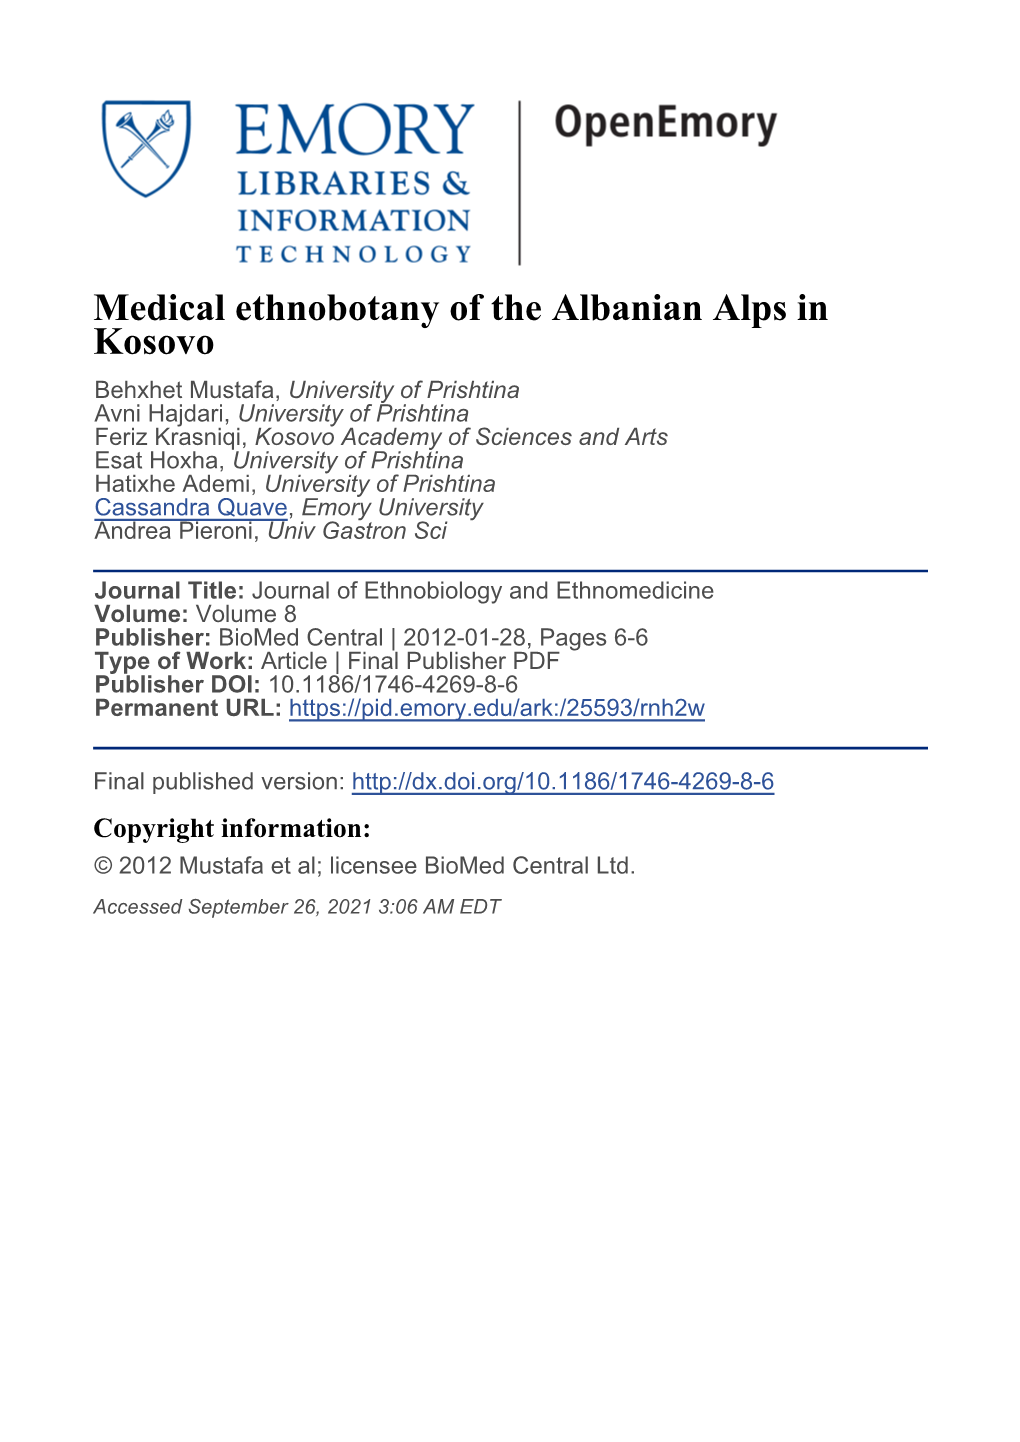 Medical Ethnobotany of the Albanian Alps in Kosovo